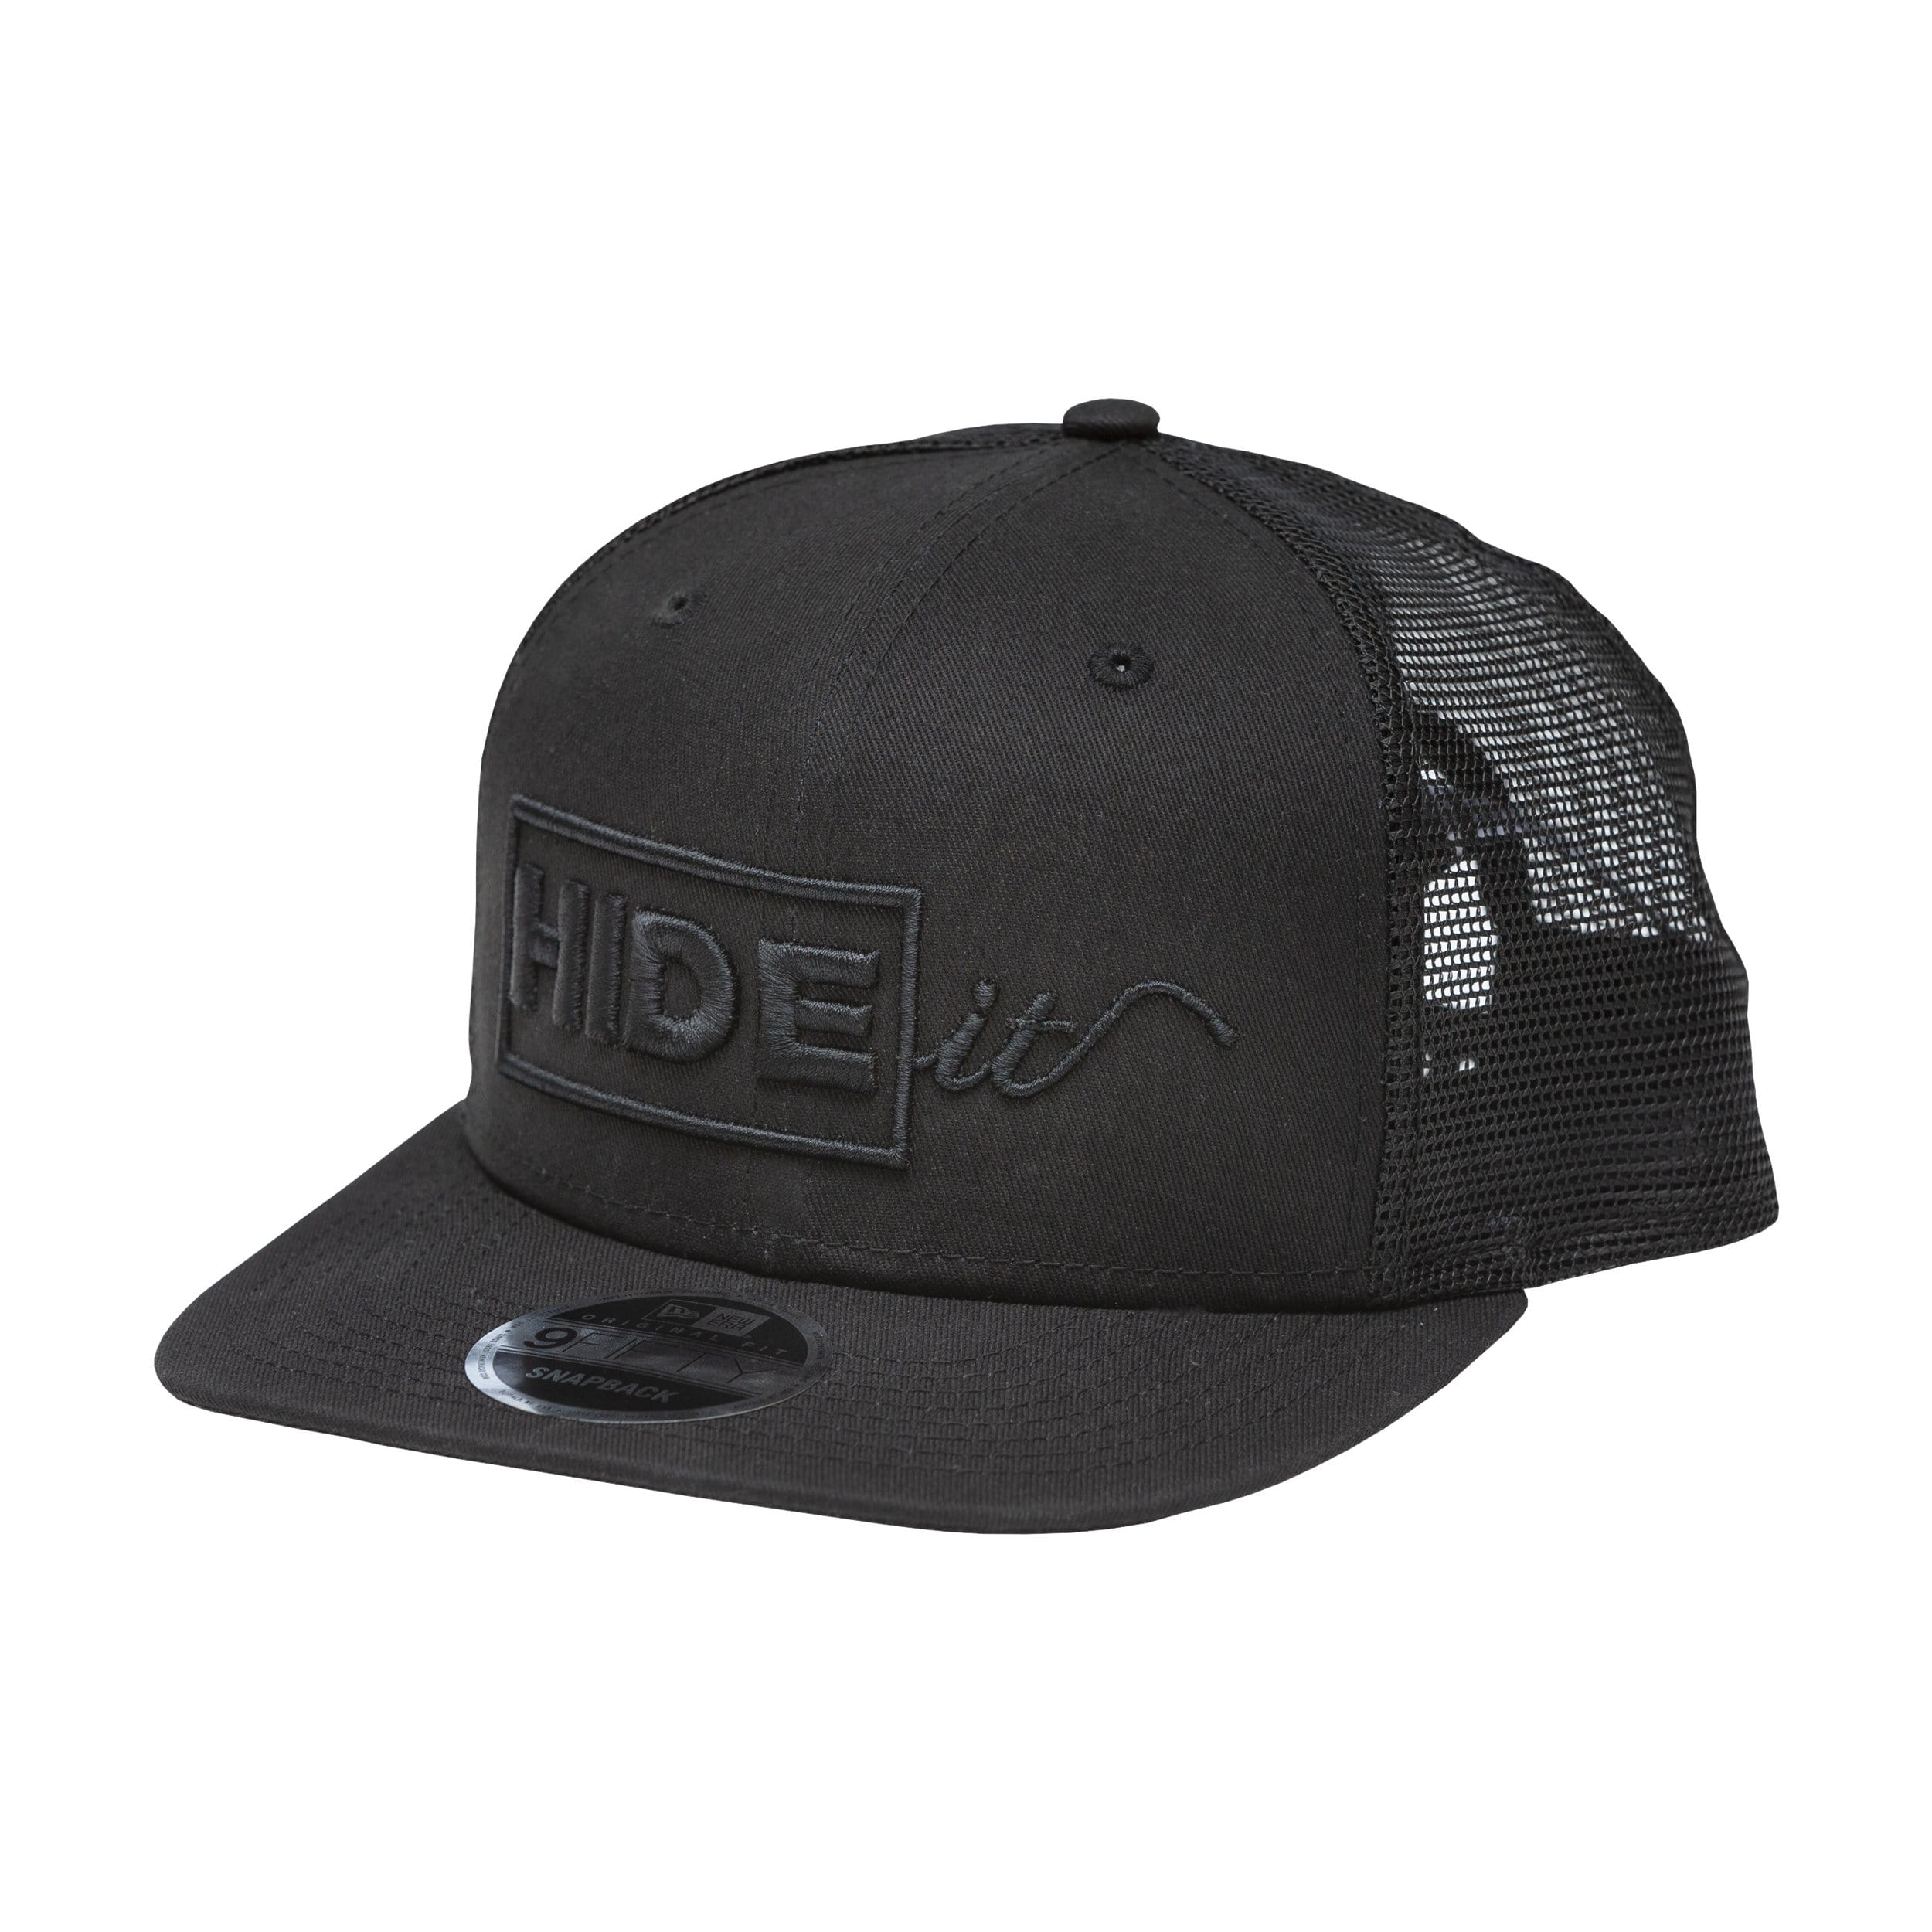 All black embroidered HIDEit Mounts New Era Snapback hat.